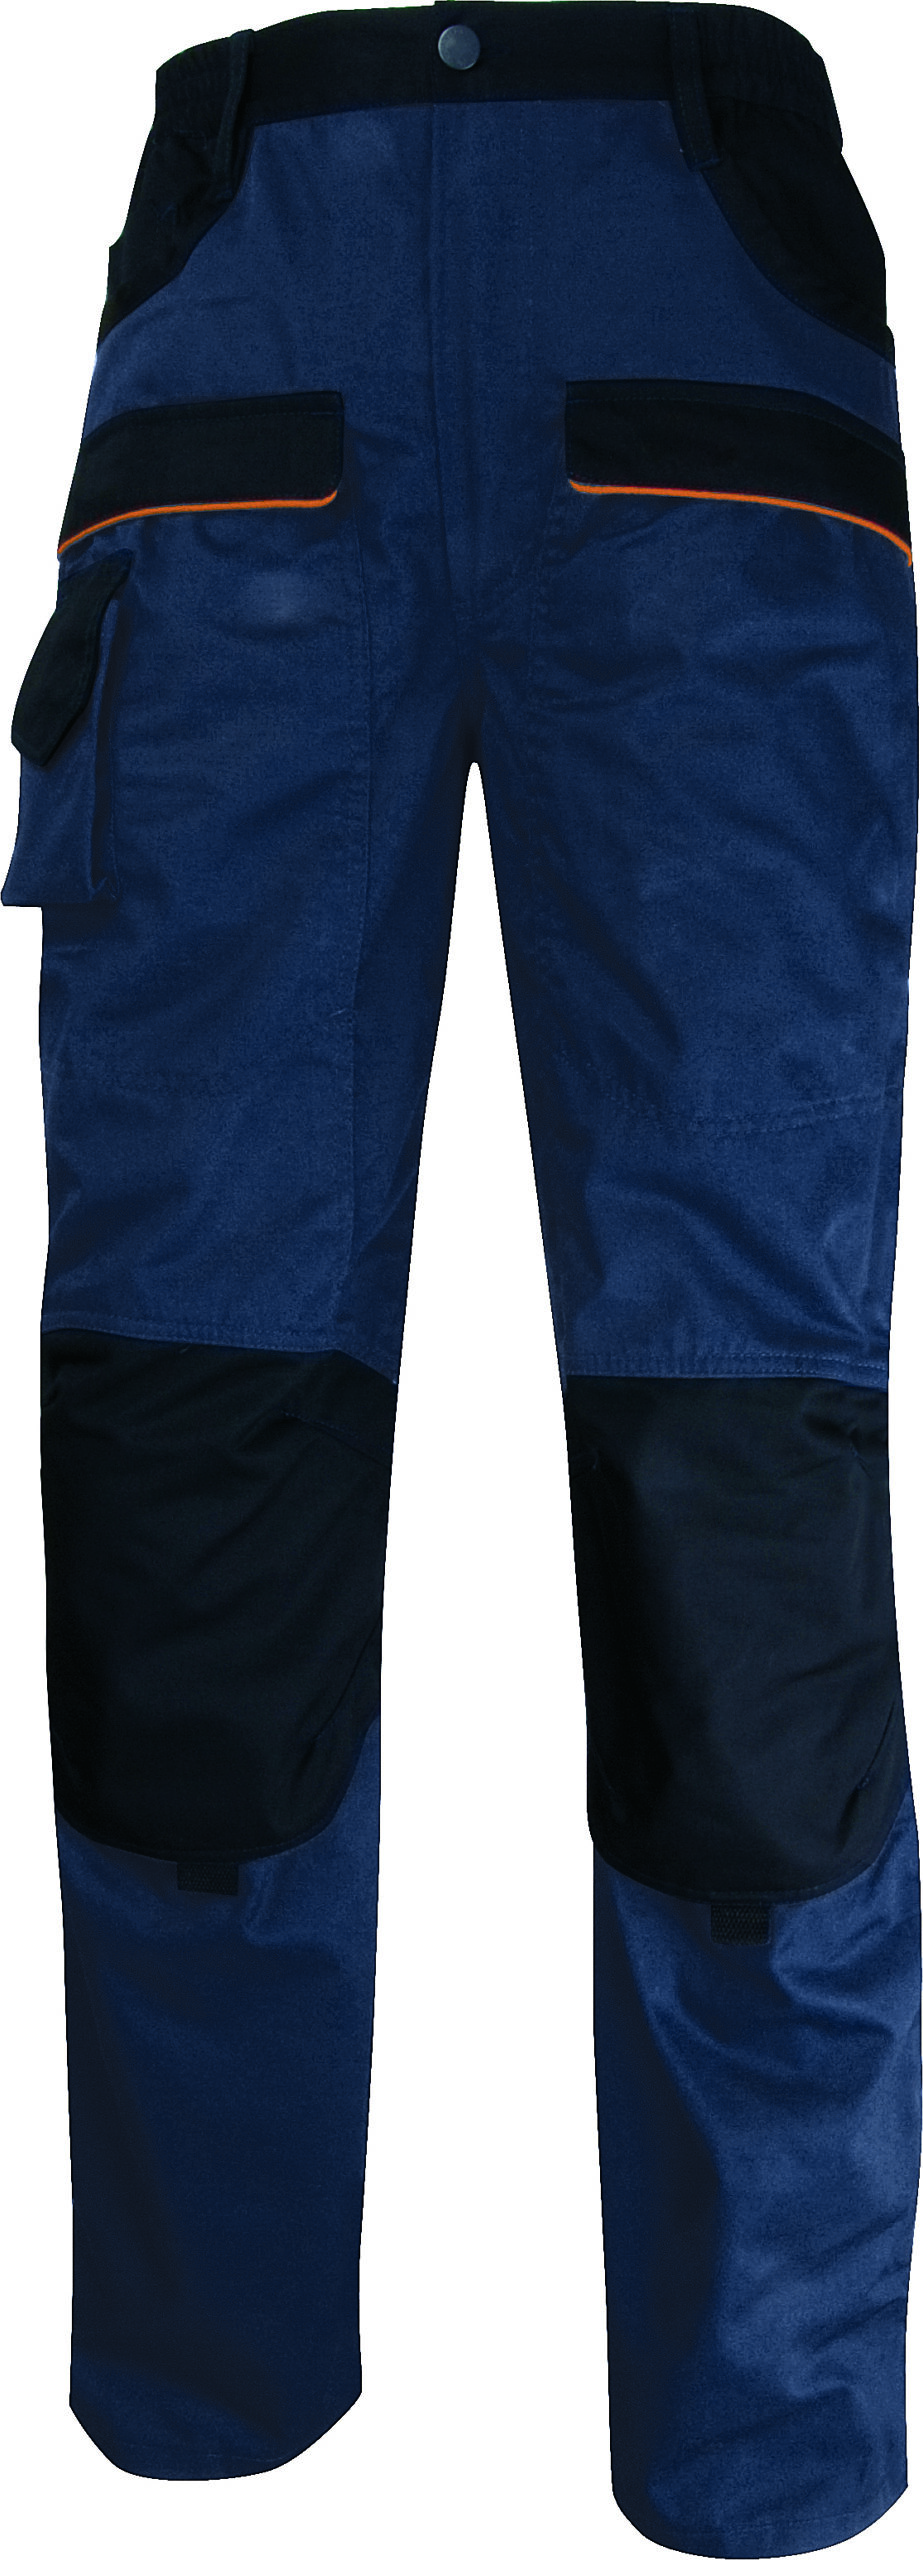 Pantalone da Lavoro Mach 2 Blu Nero Tg Xl Mcpanbmxg 3295249230814